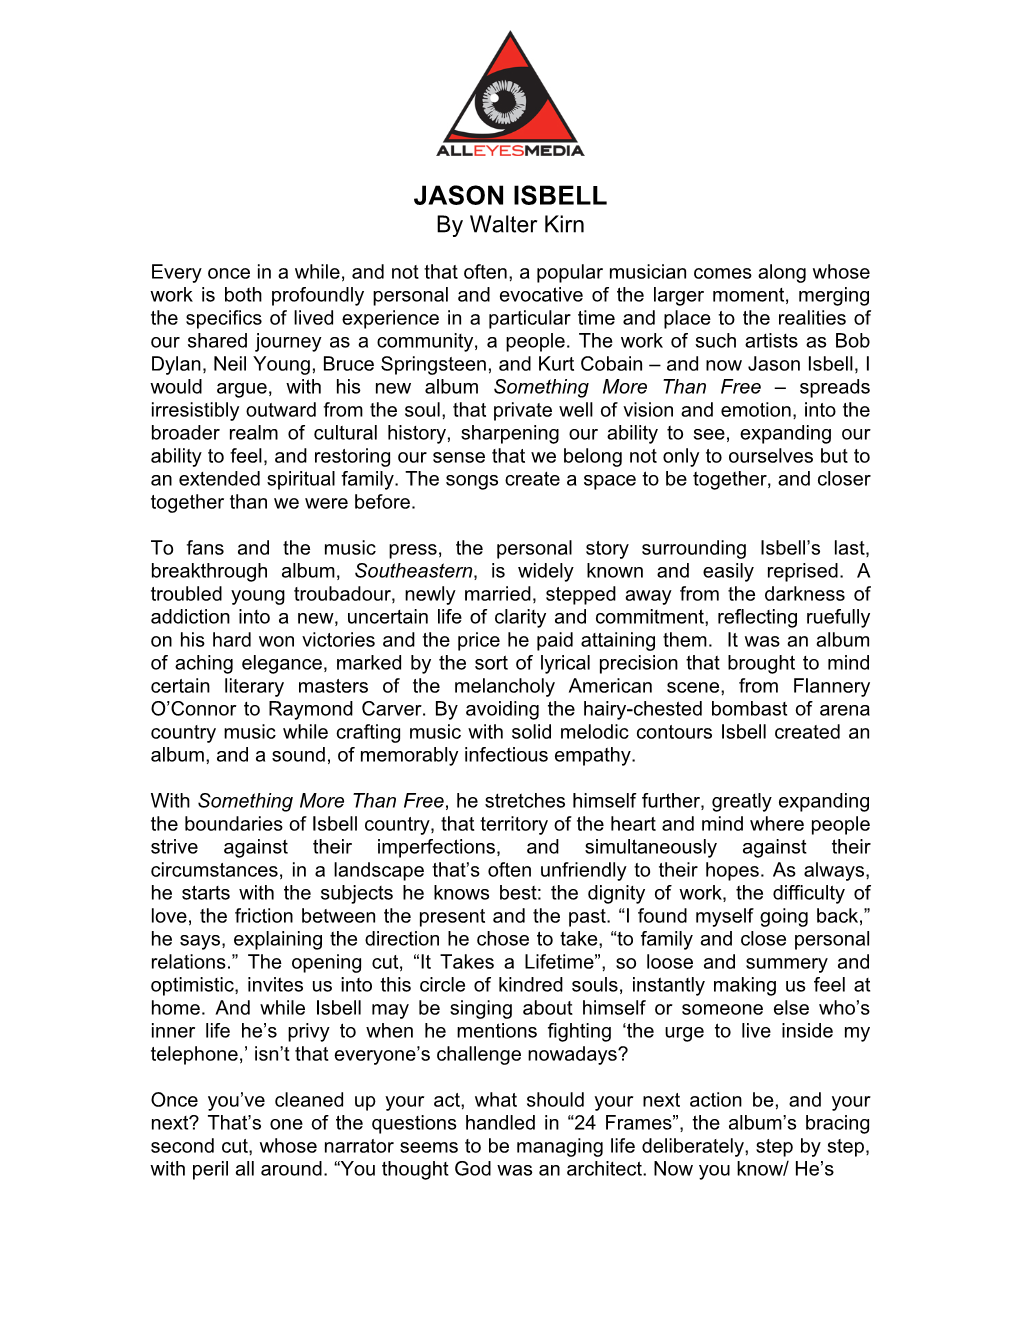 JASON ISBELL by Walter Kirn